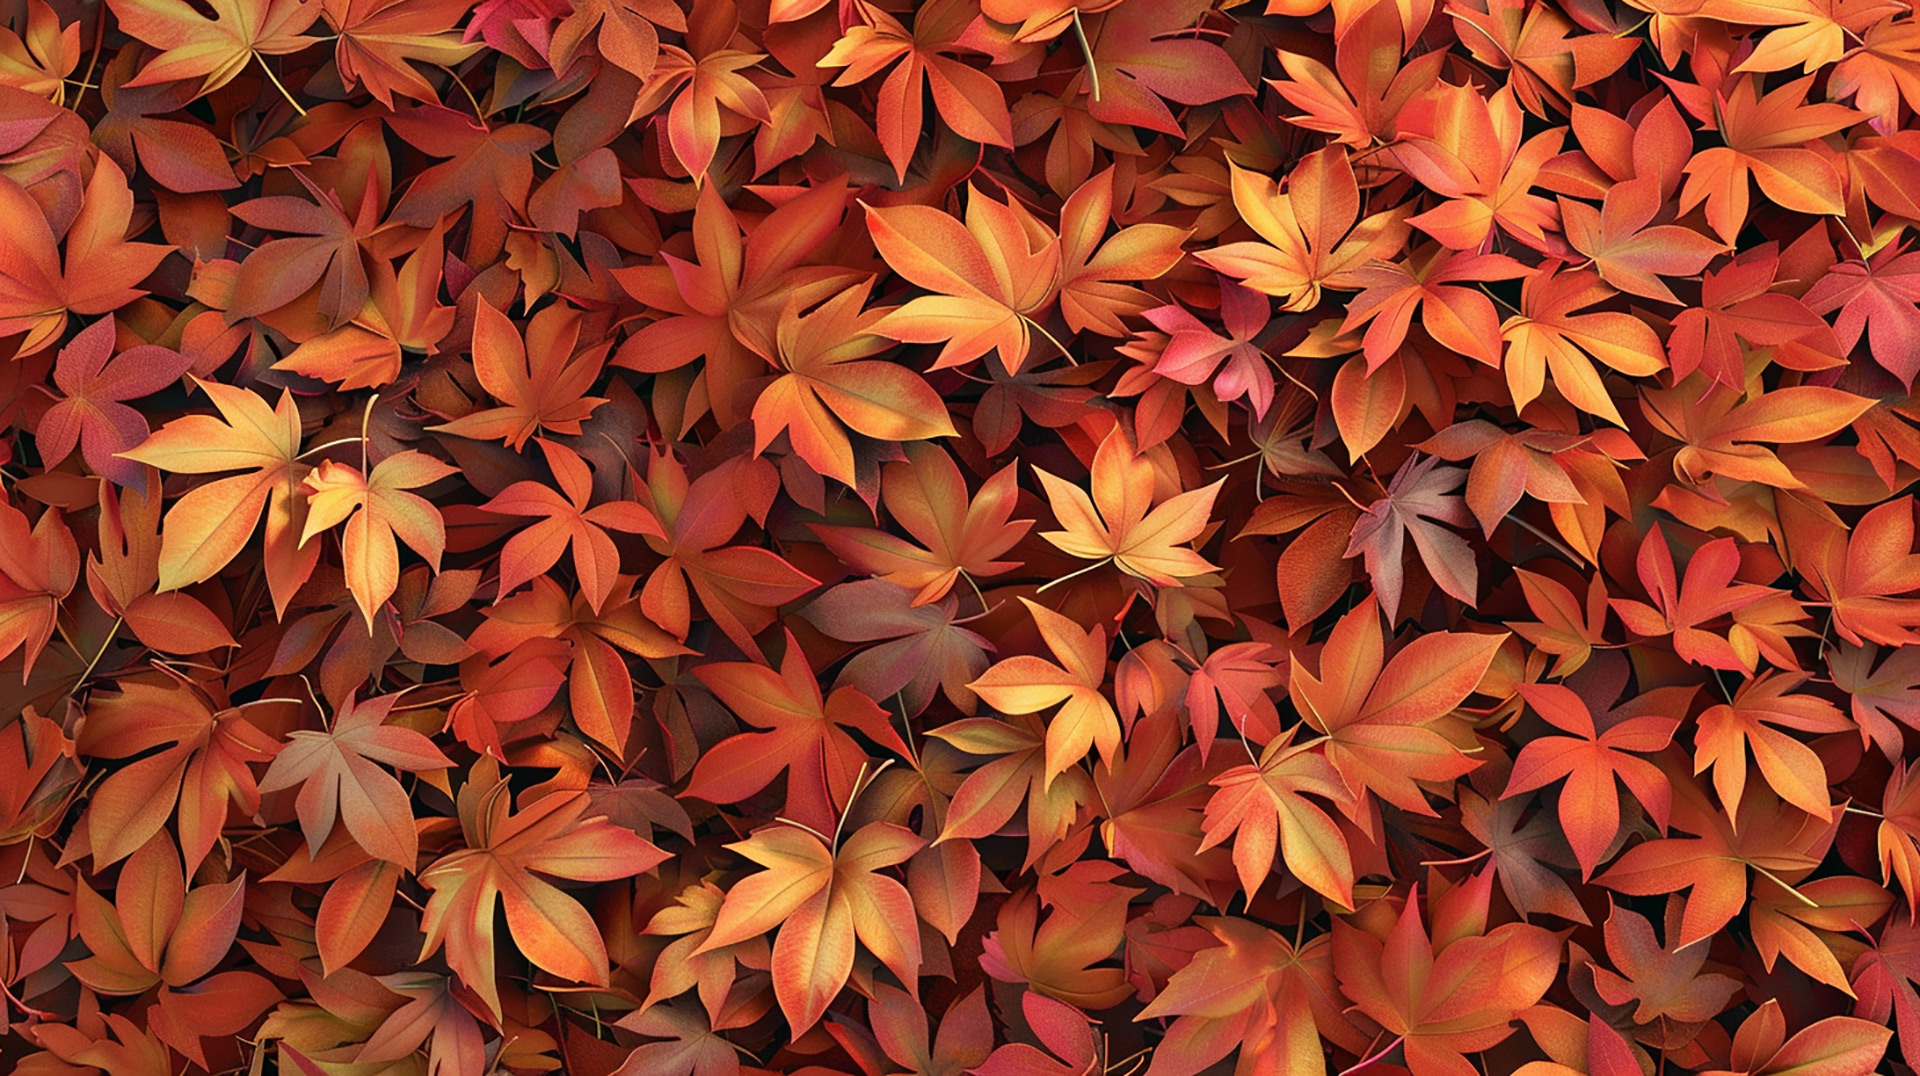 Crimson Carpet: Autumn Leaves Carpeting the Ground